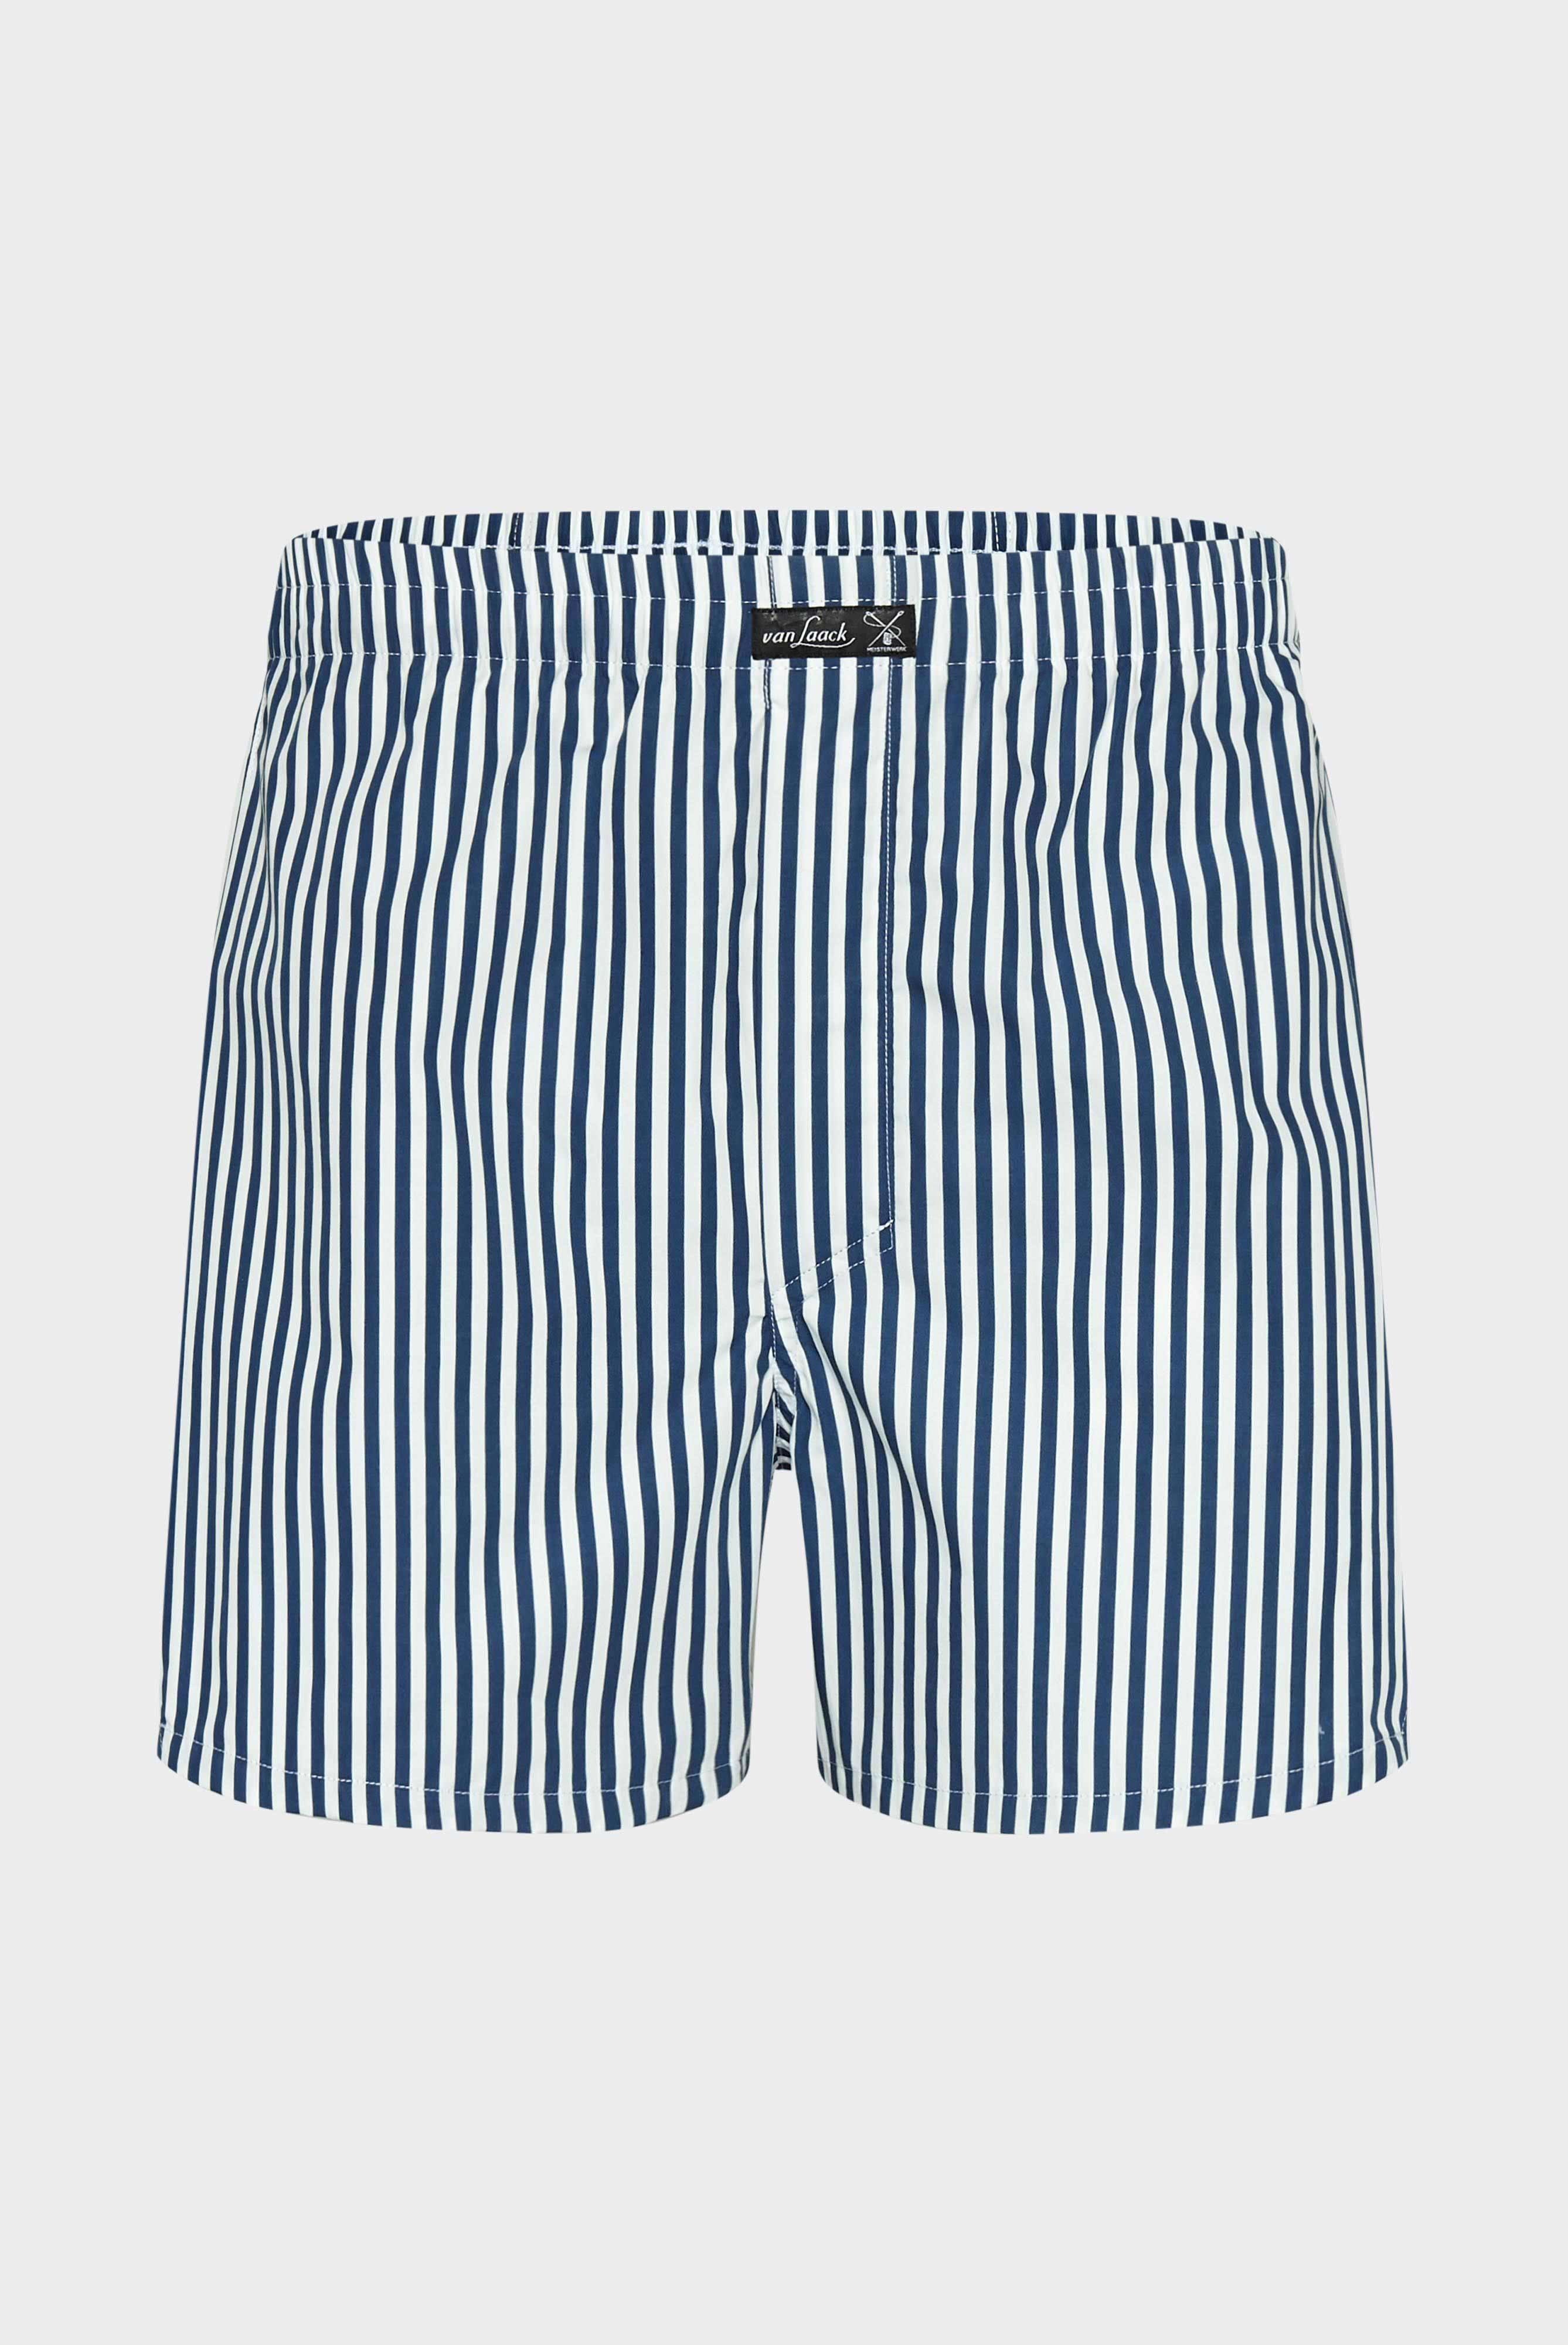 Underwear+Striped Printed Poplin Boxer Shorts blue+91.1100..170275.780.46